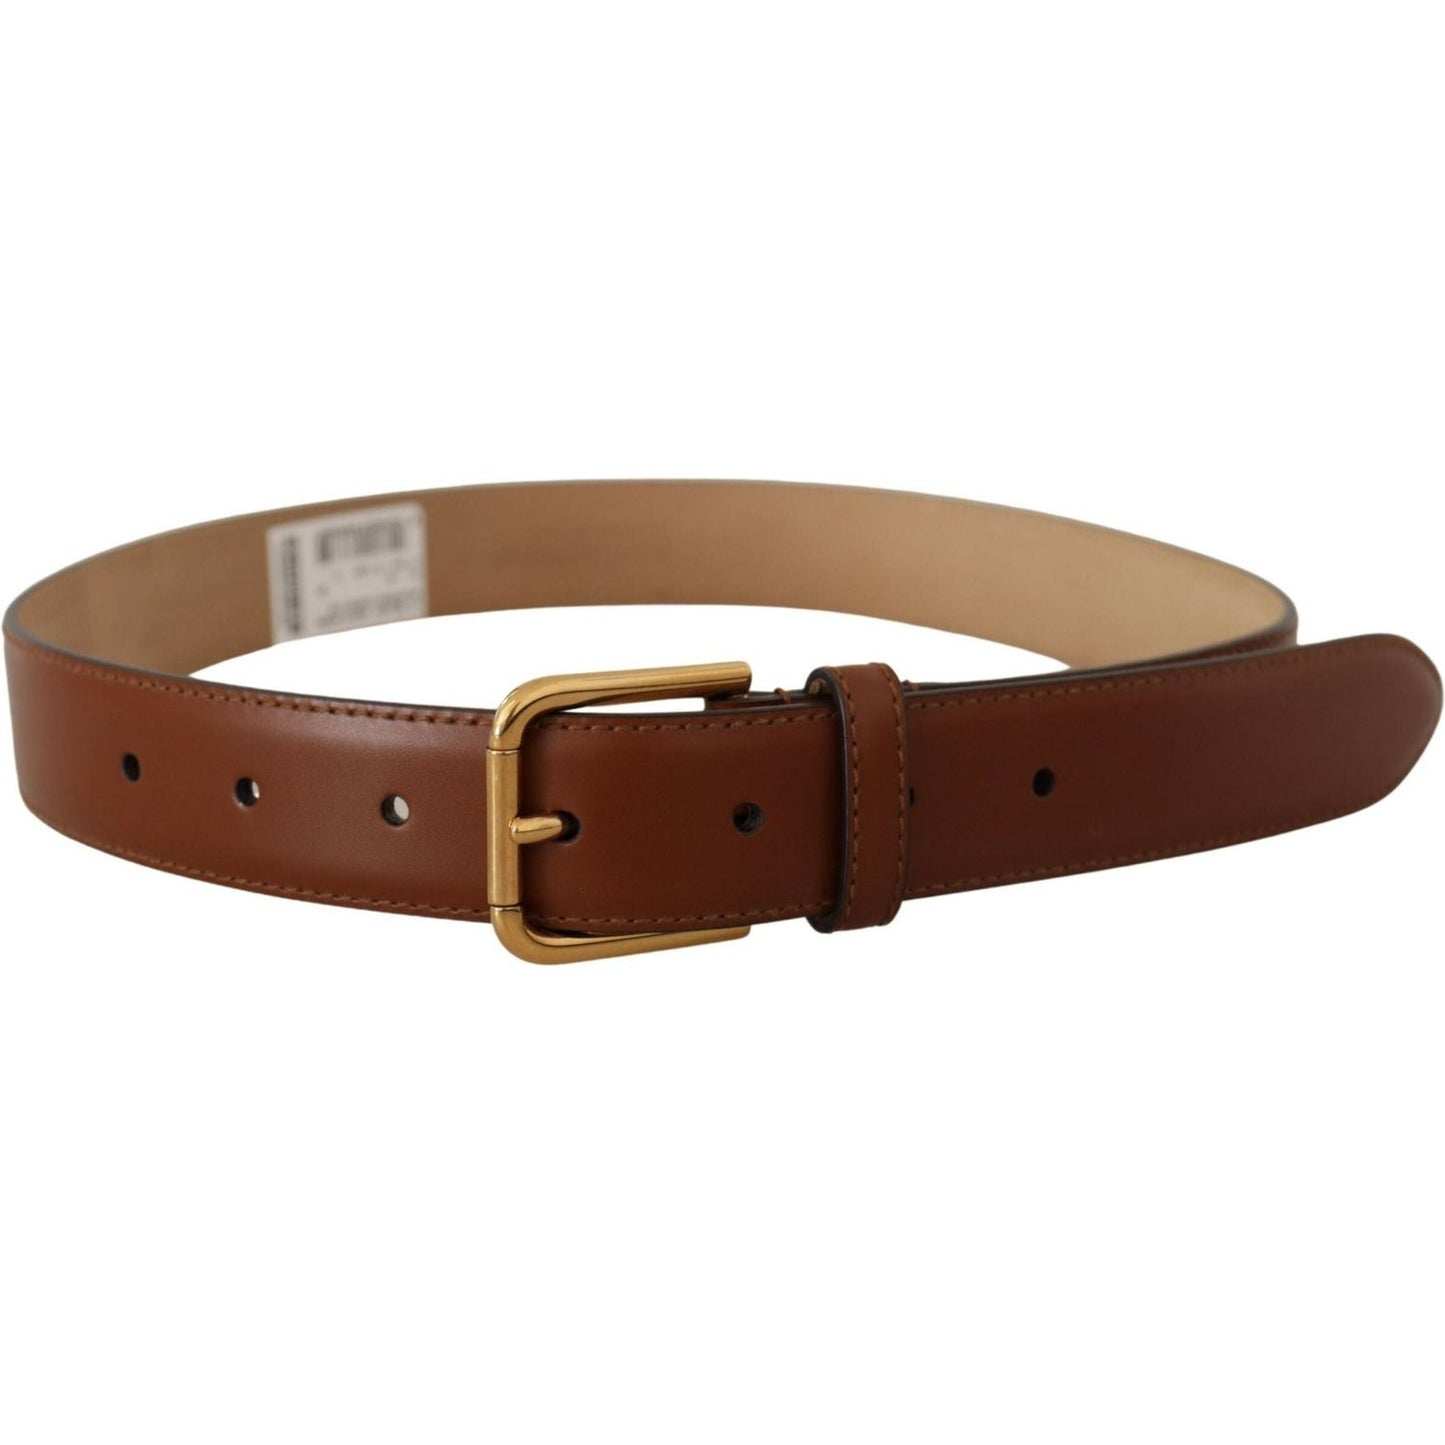 Dolce & Gabbana Elegant Leather Belt with Engraved Buckle brown-leather-polished-gold-metal-waist-buckle-belt IMG_8951-scaled-6d020c2f-b02.jpg